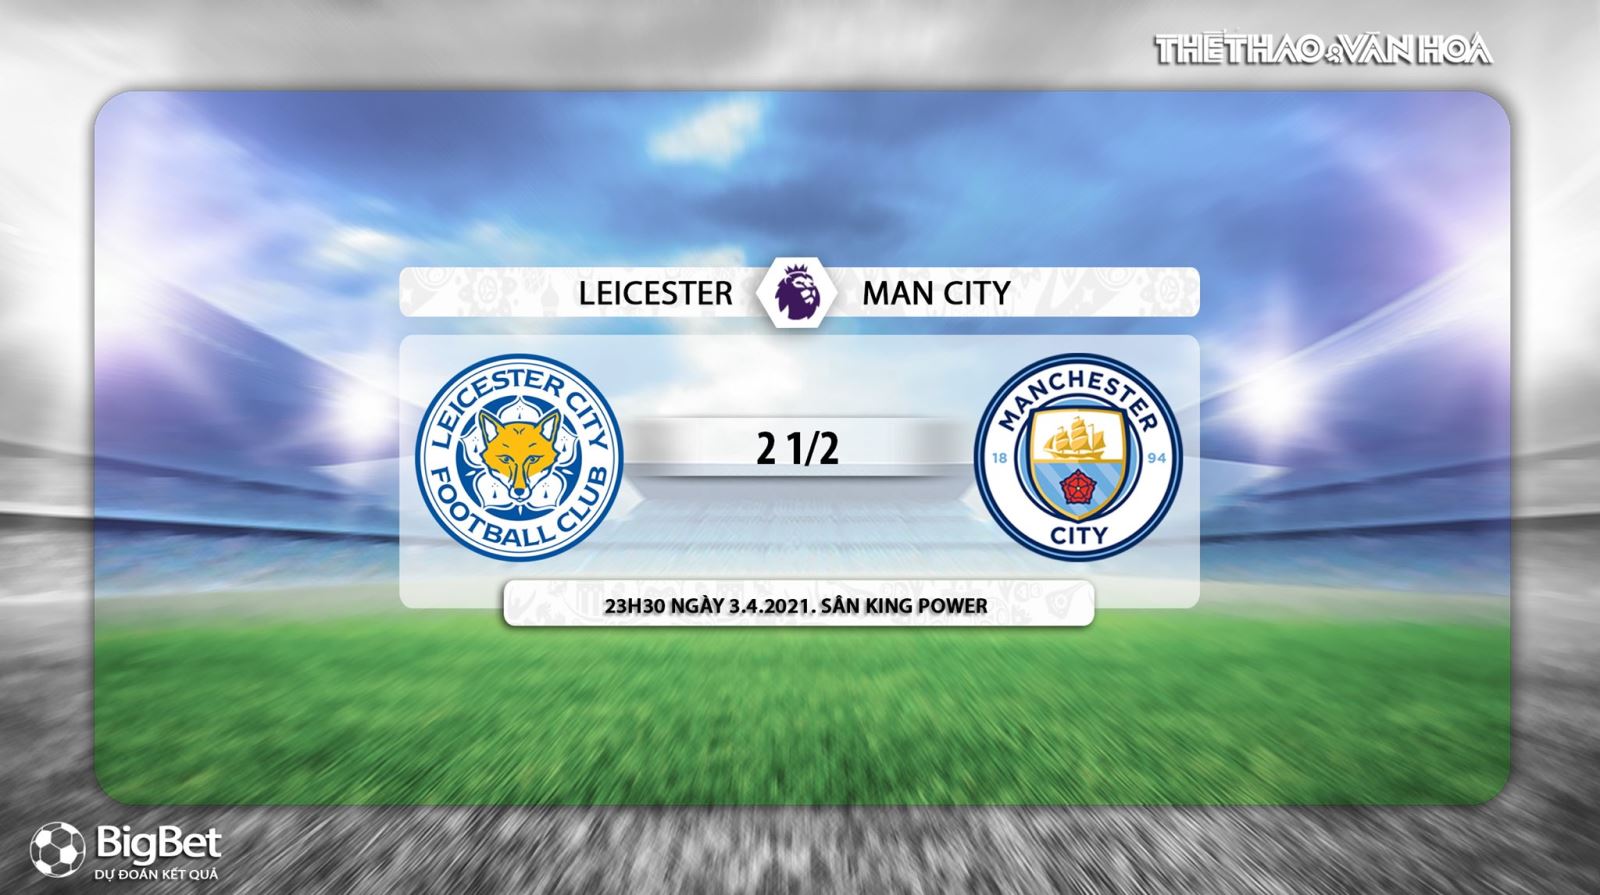 Leicester vs Man City, Leicester đấu với Man City, Leicester, Man City, trực tiếp Leicester vs Man City, trực tiếp bóng đá